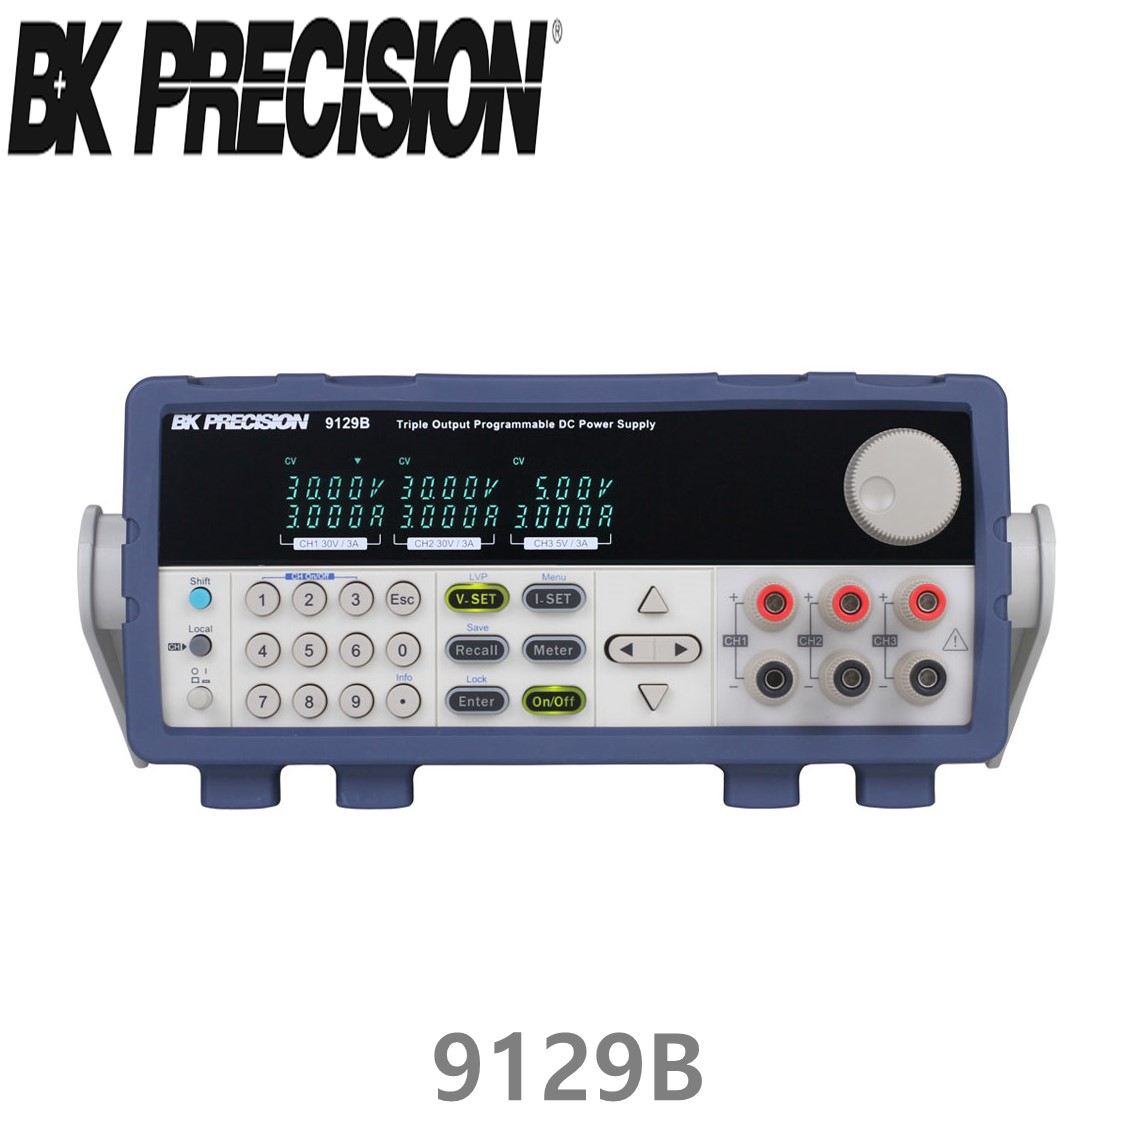 [ BK PRECISION ] BK 9129B, 30V/3A x 2채널, 5V/3A x 1채널, Programmable DC Power Supply, 프로그래머블 DC 전원공급기(195W), B&K 9129B